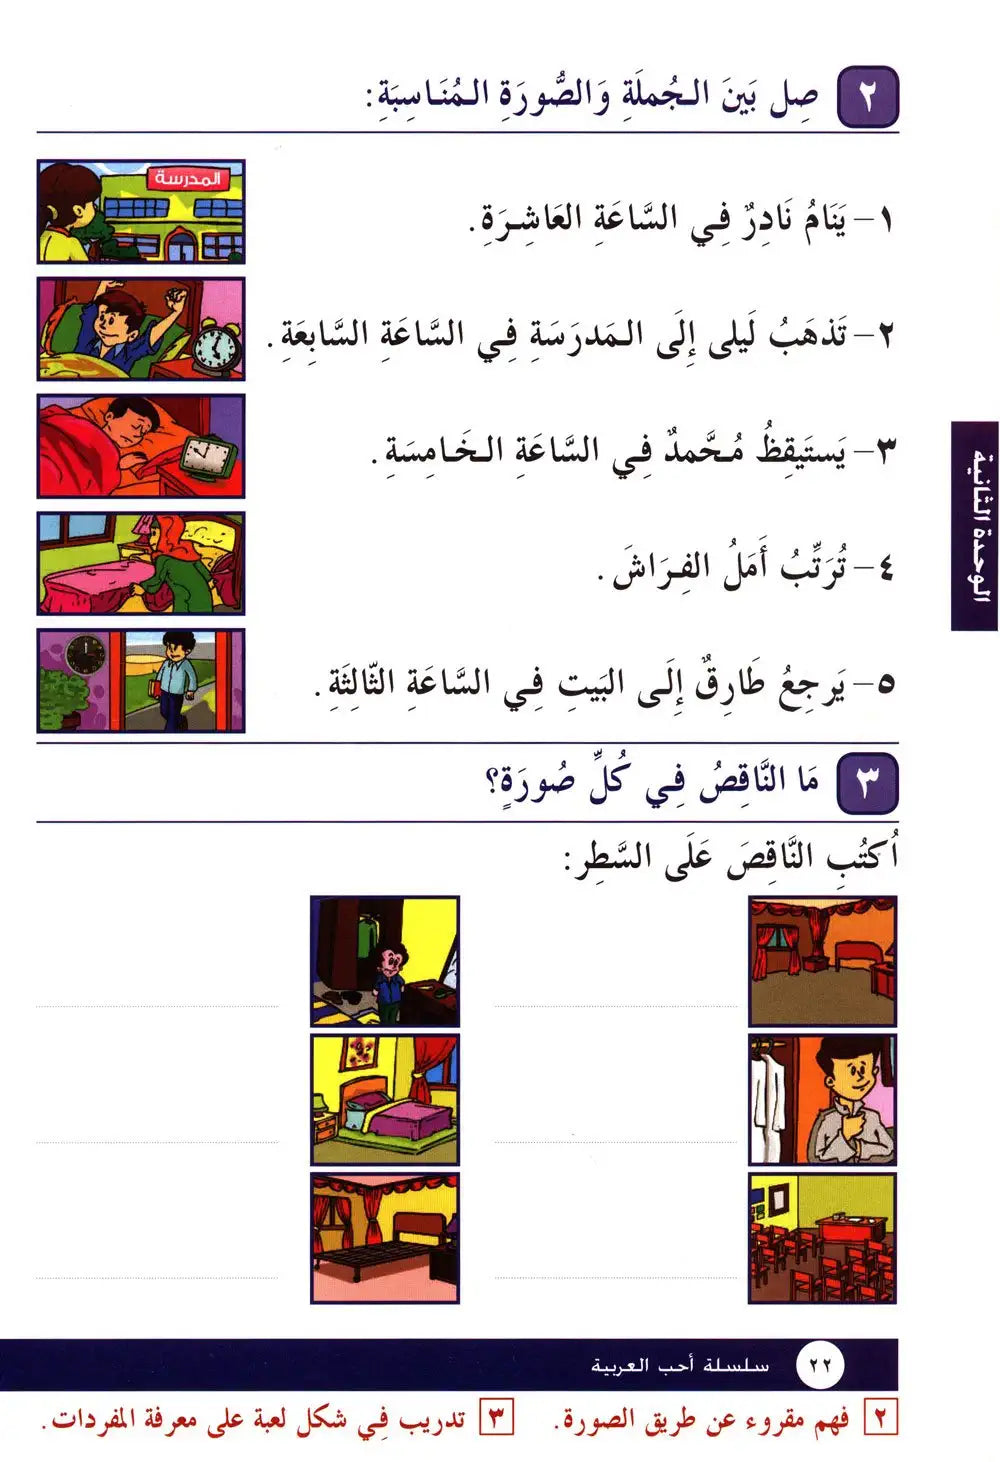 I Love Arabic Workbook Level 2 أحب العربية كتاب التدريبات